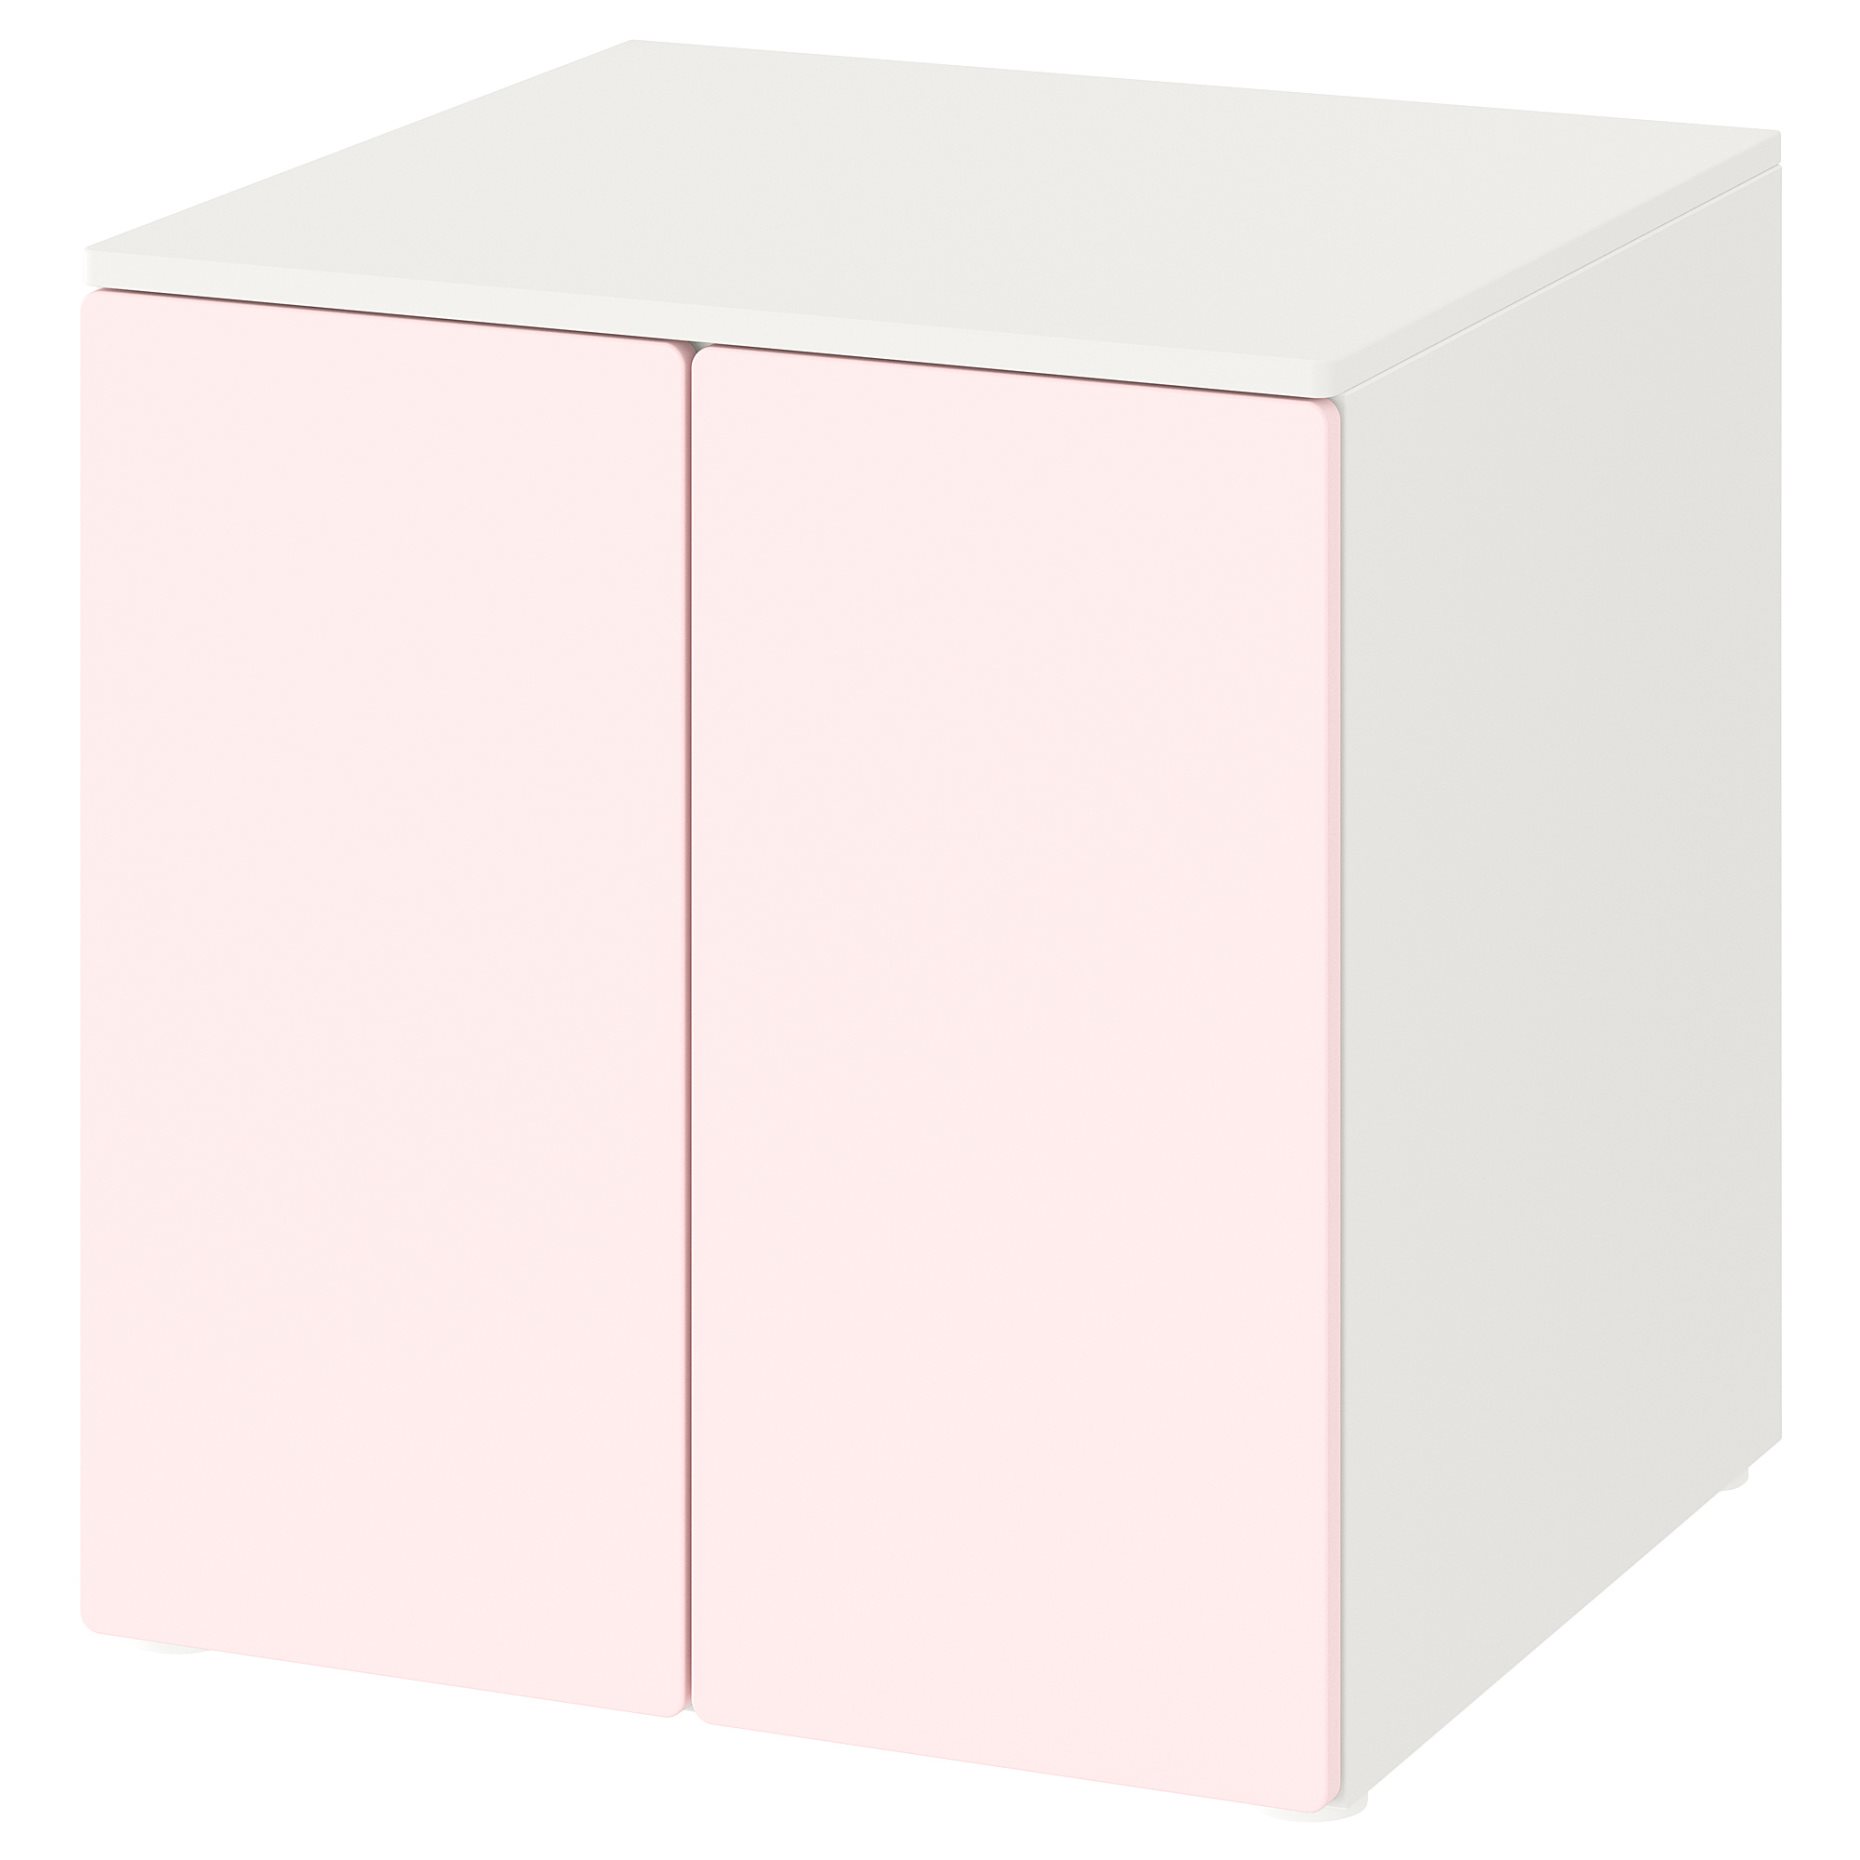 SMASTAD/PLATSA, ντουλάπι με 1 ράφι, 60x57x63 cm, 493.896.69